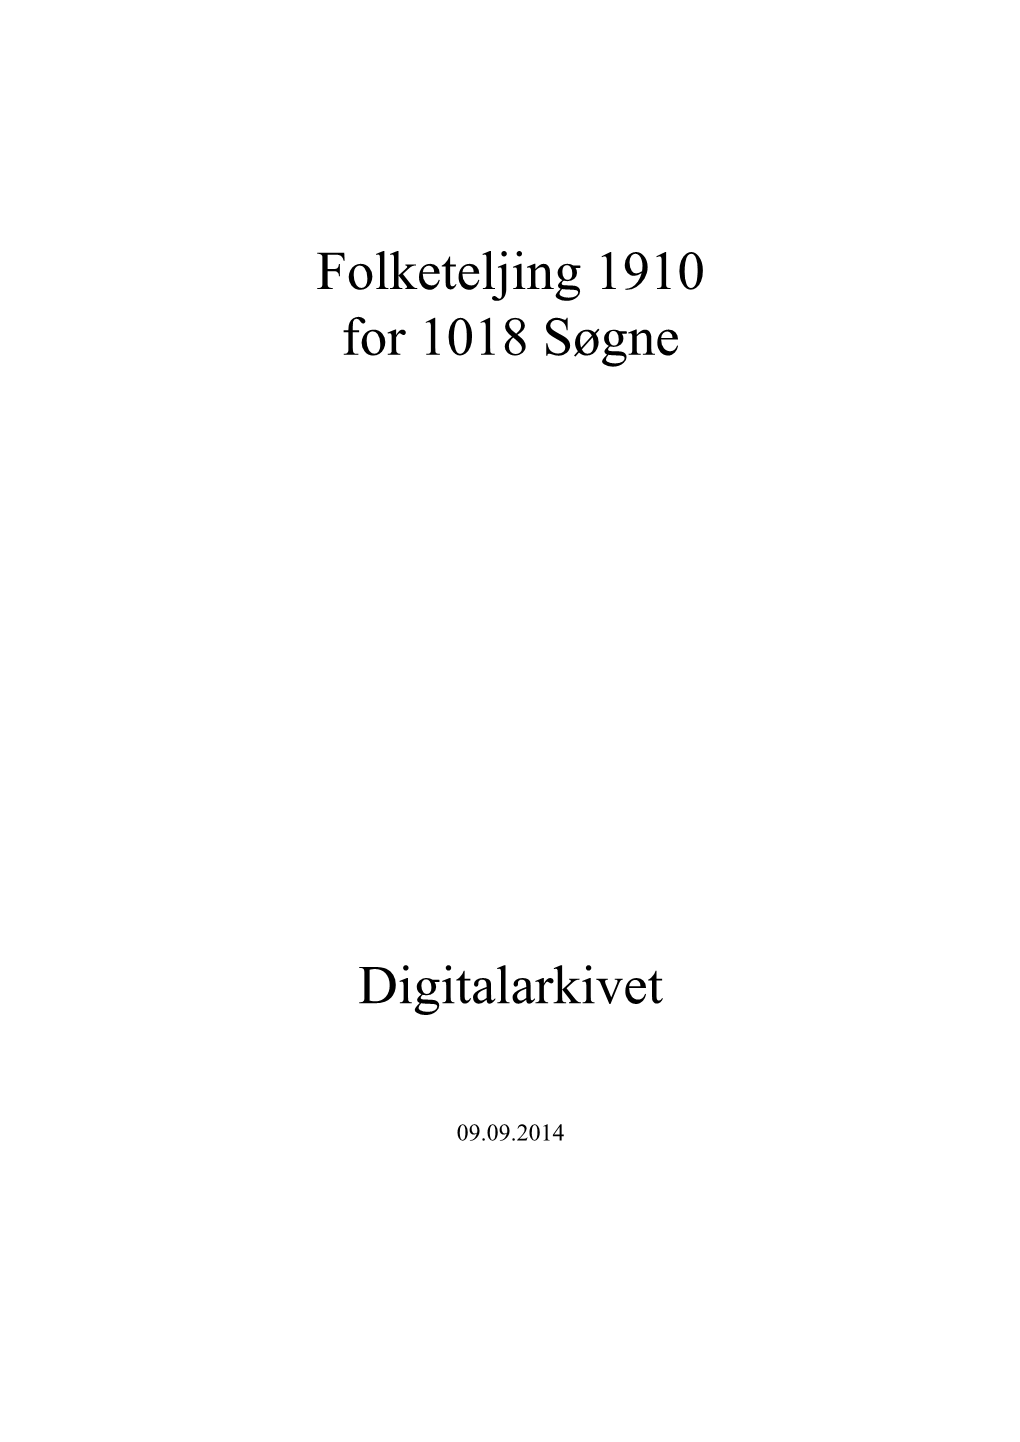 Folketeljing 1910 for 1018 Søgne Digitalarkivet